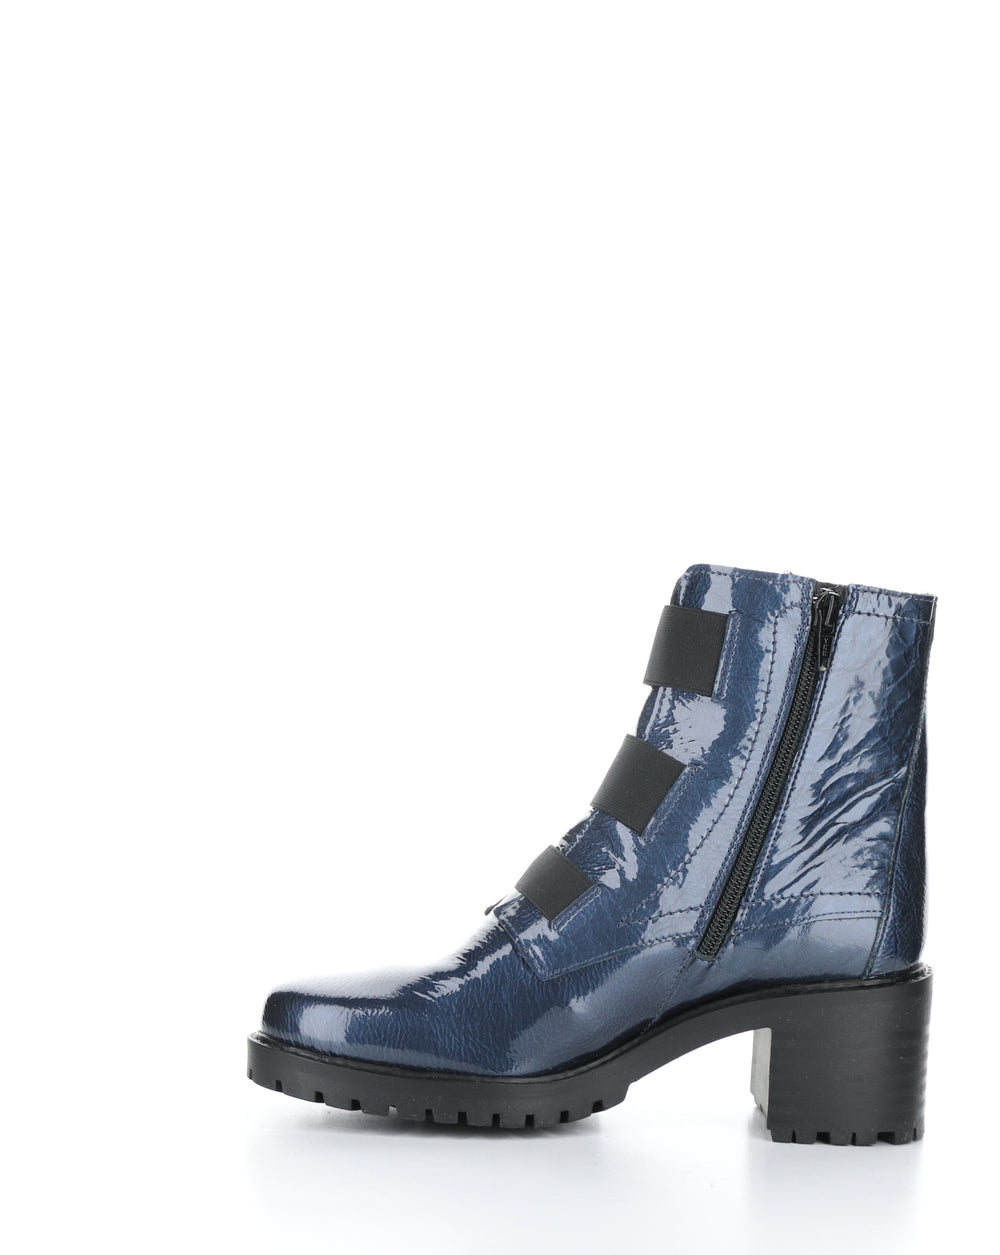 INDIE BLUE/BLACK Elasticated Boots